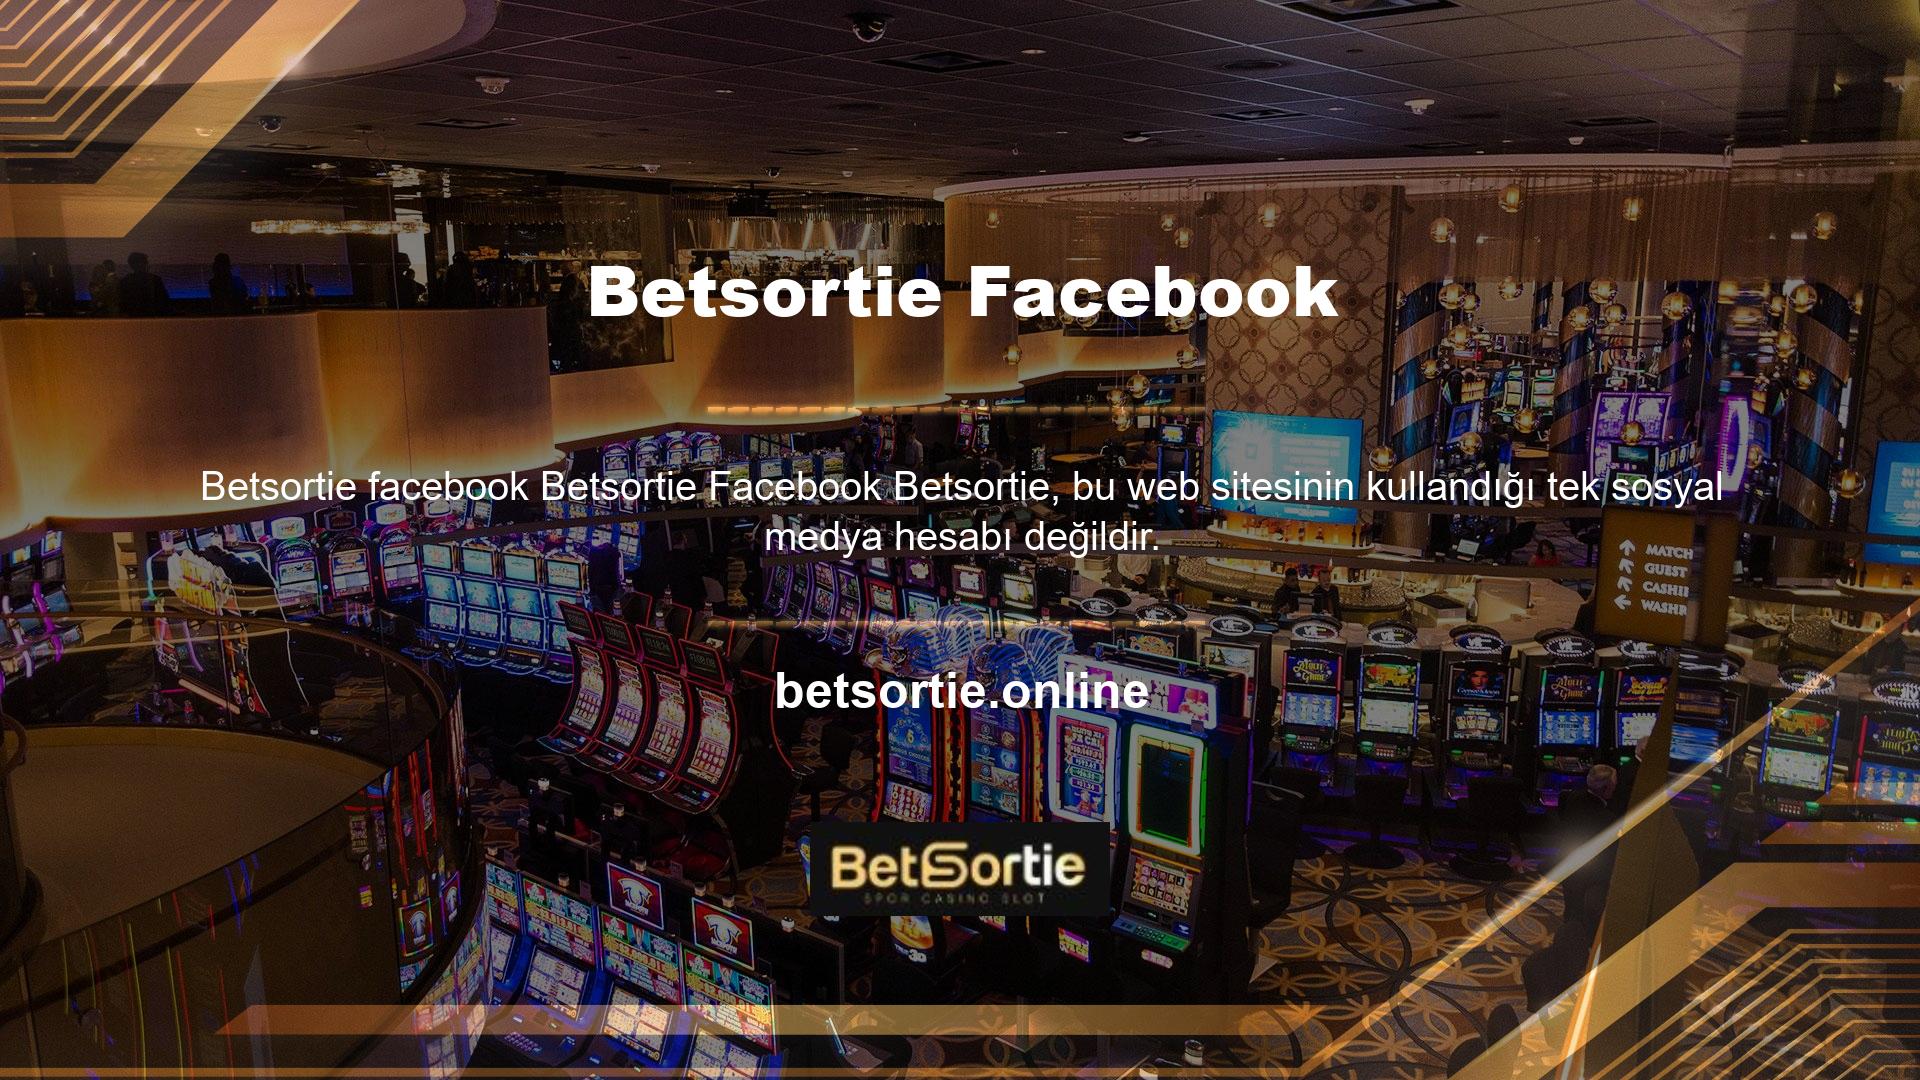 Betsortie Facebook hesabı da mevcut